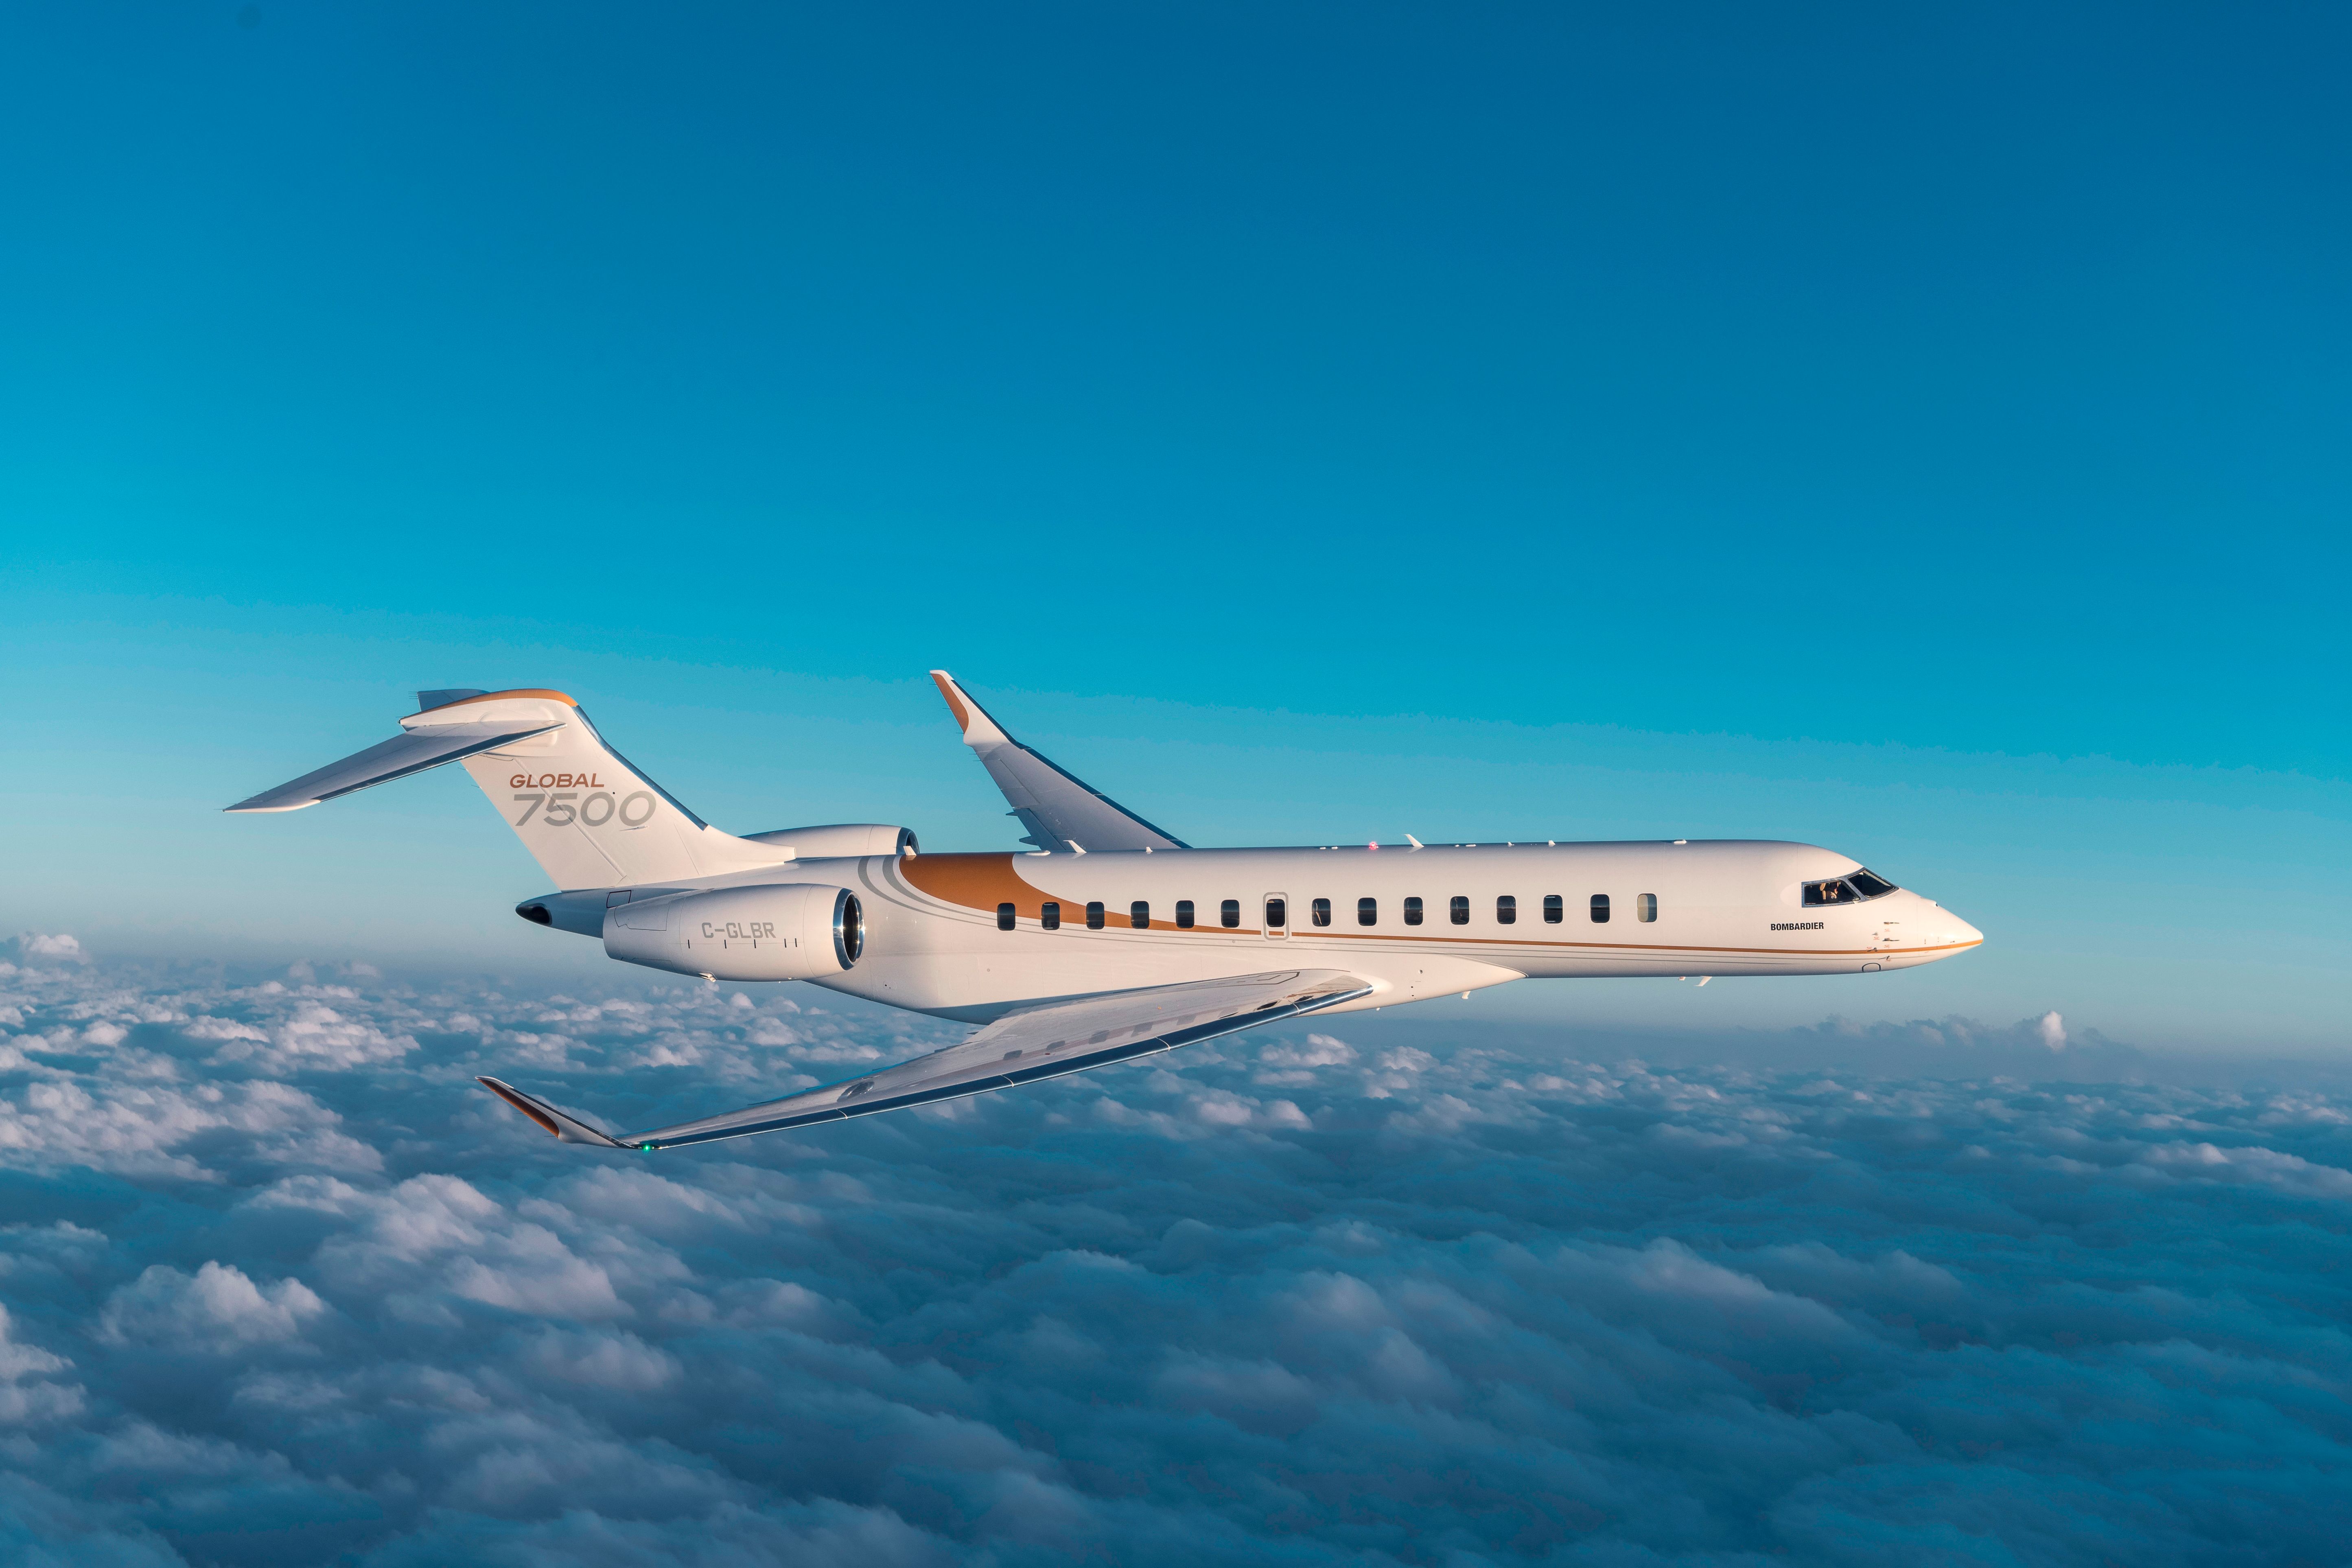 Bombardier 7500 exterior against blue sky